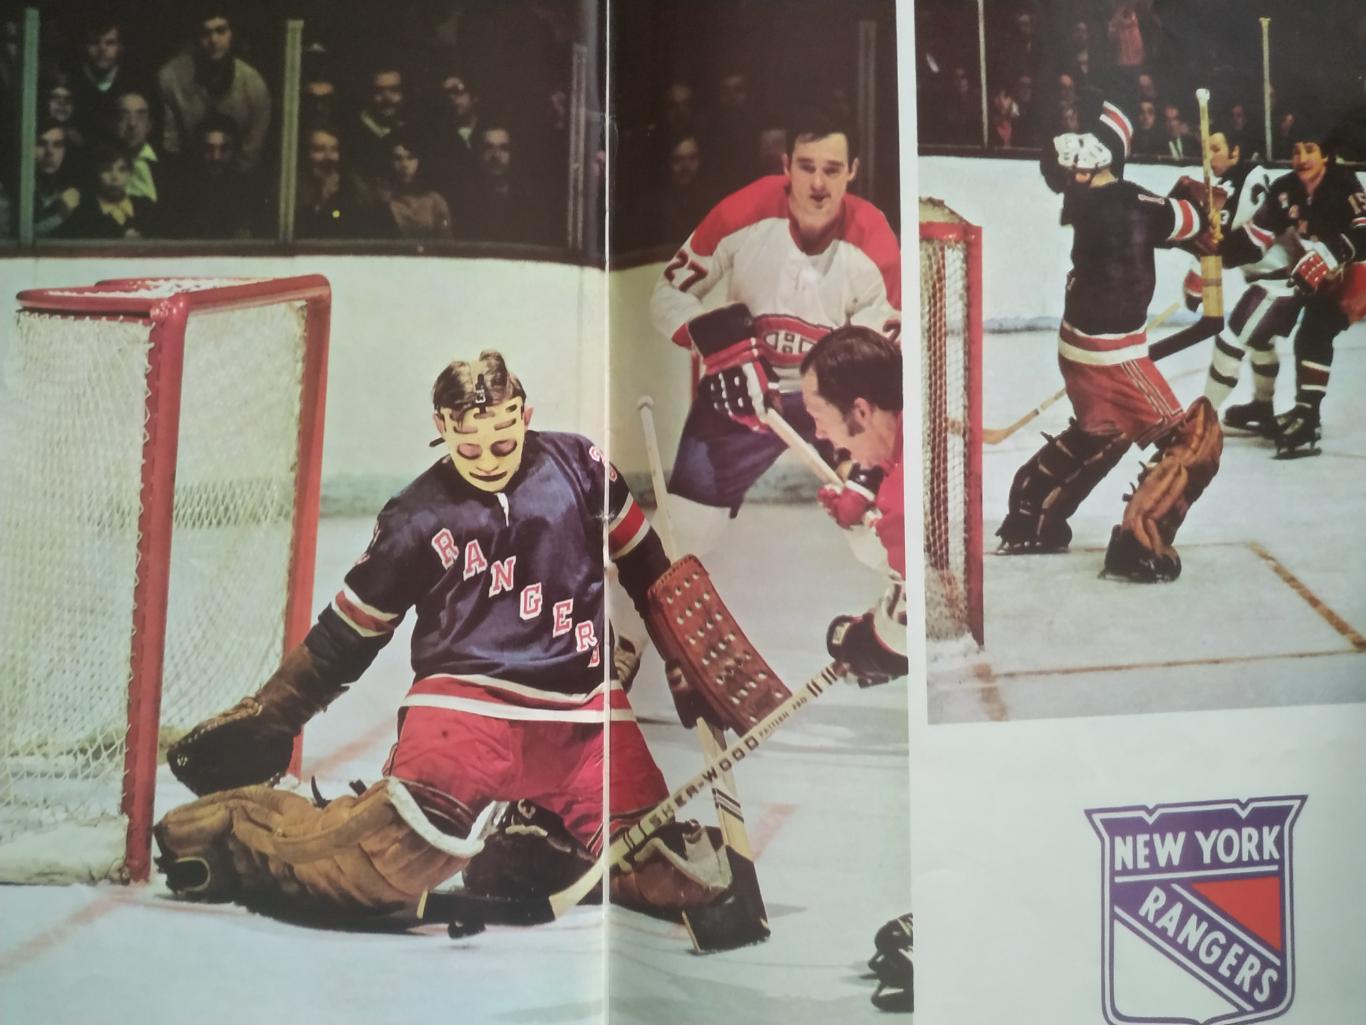 ХОККЕЙ ПРОГРАММА МАТЧА НХЛ NHL 1972 FEB.22 NEW YORK VS. CANADIENS PROGRAM GAME 5